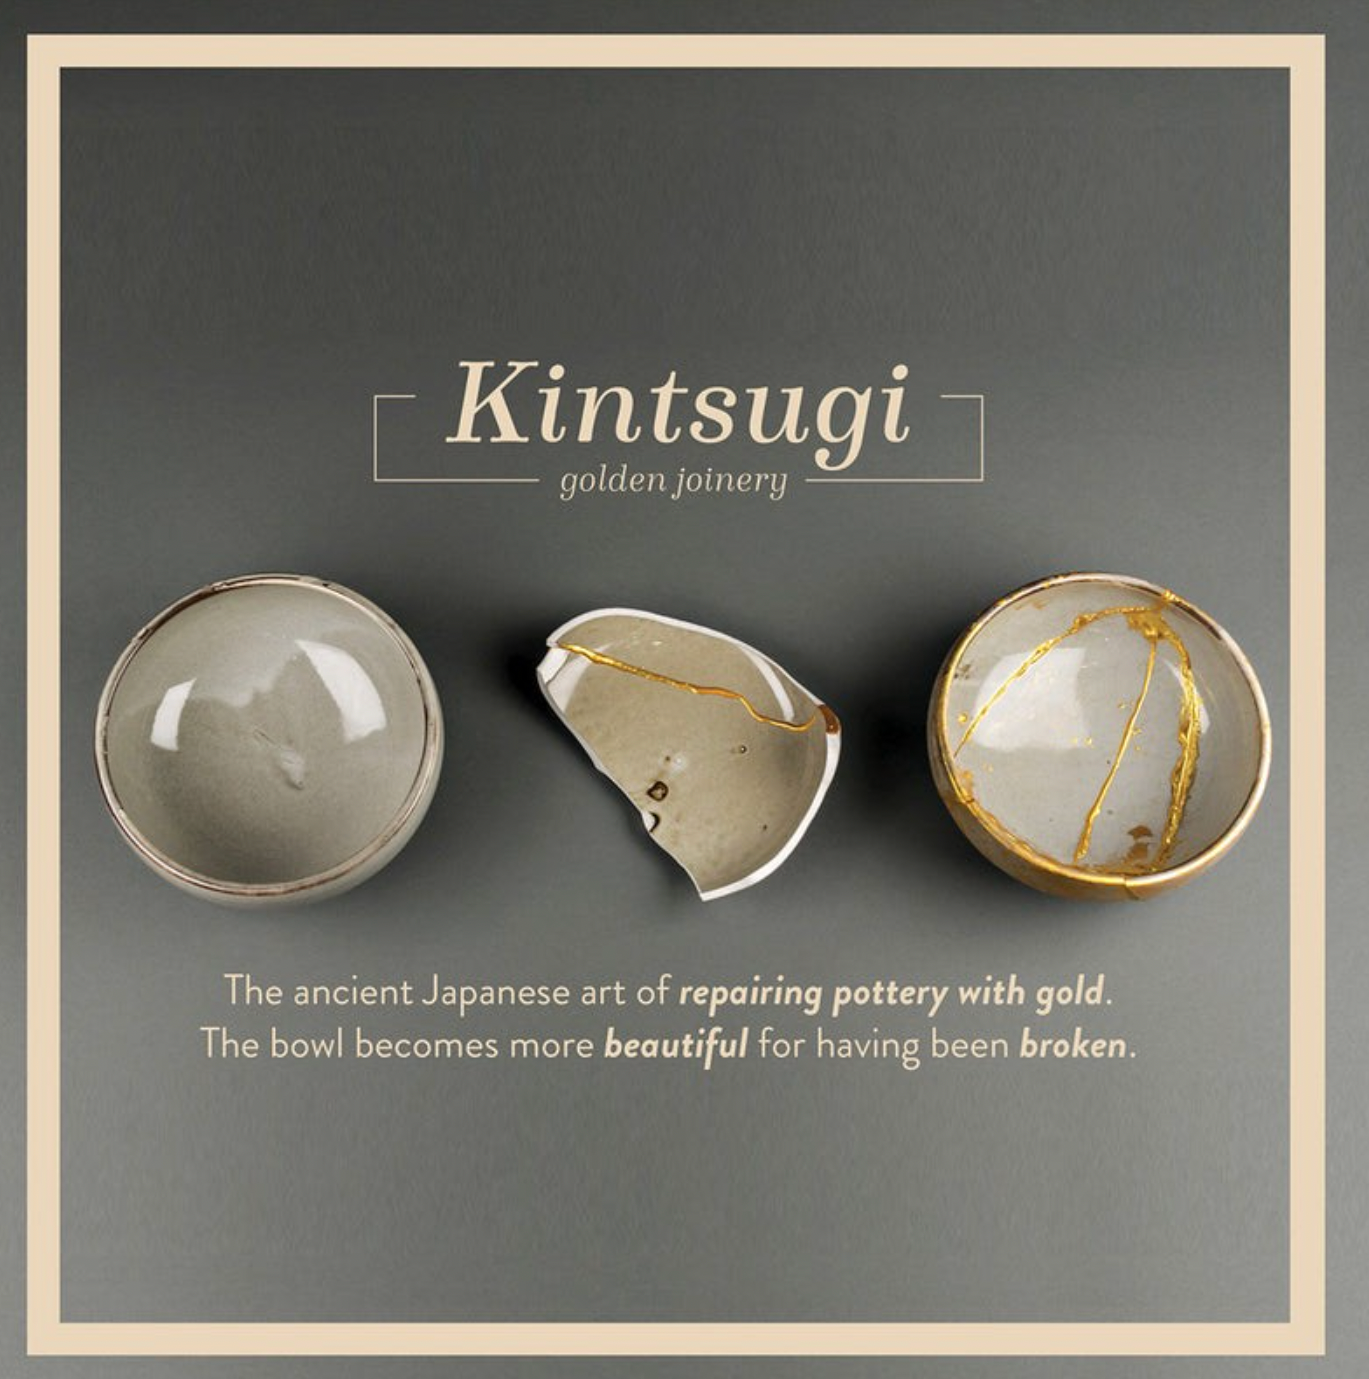 Kintsugi: Japan's ancient art of embracing imperfection